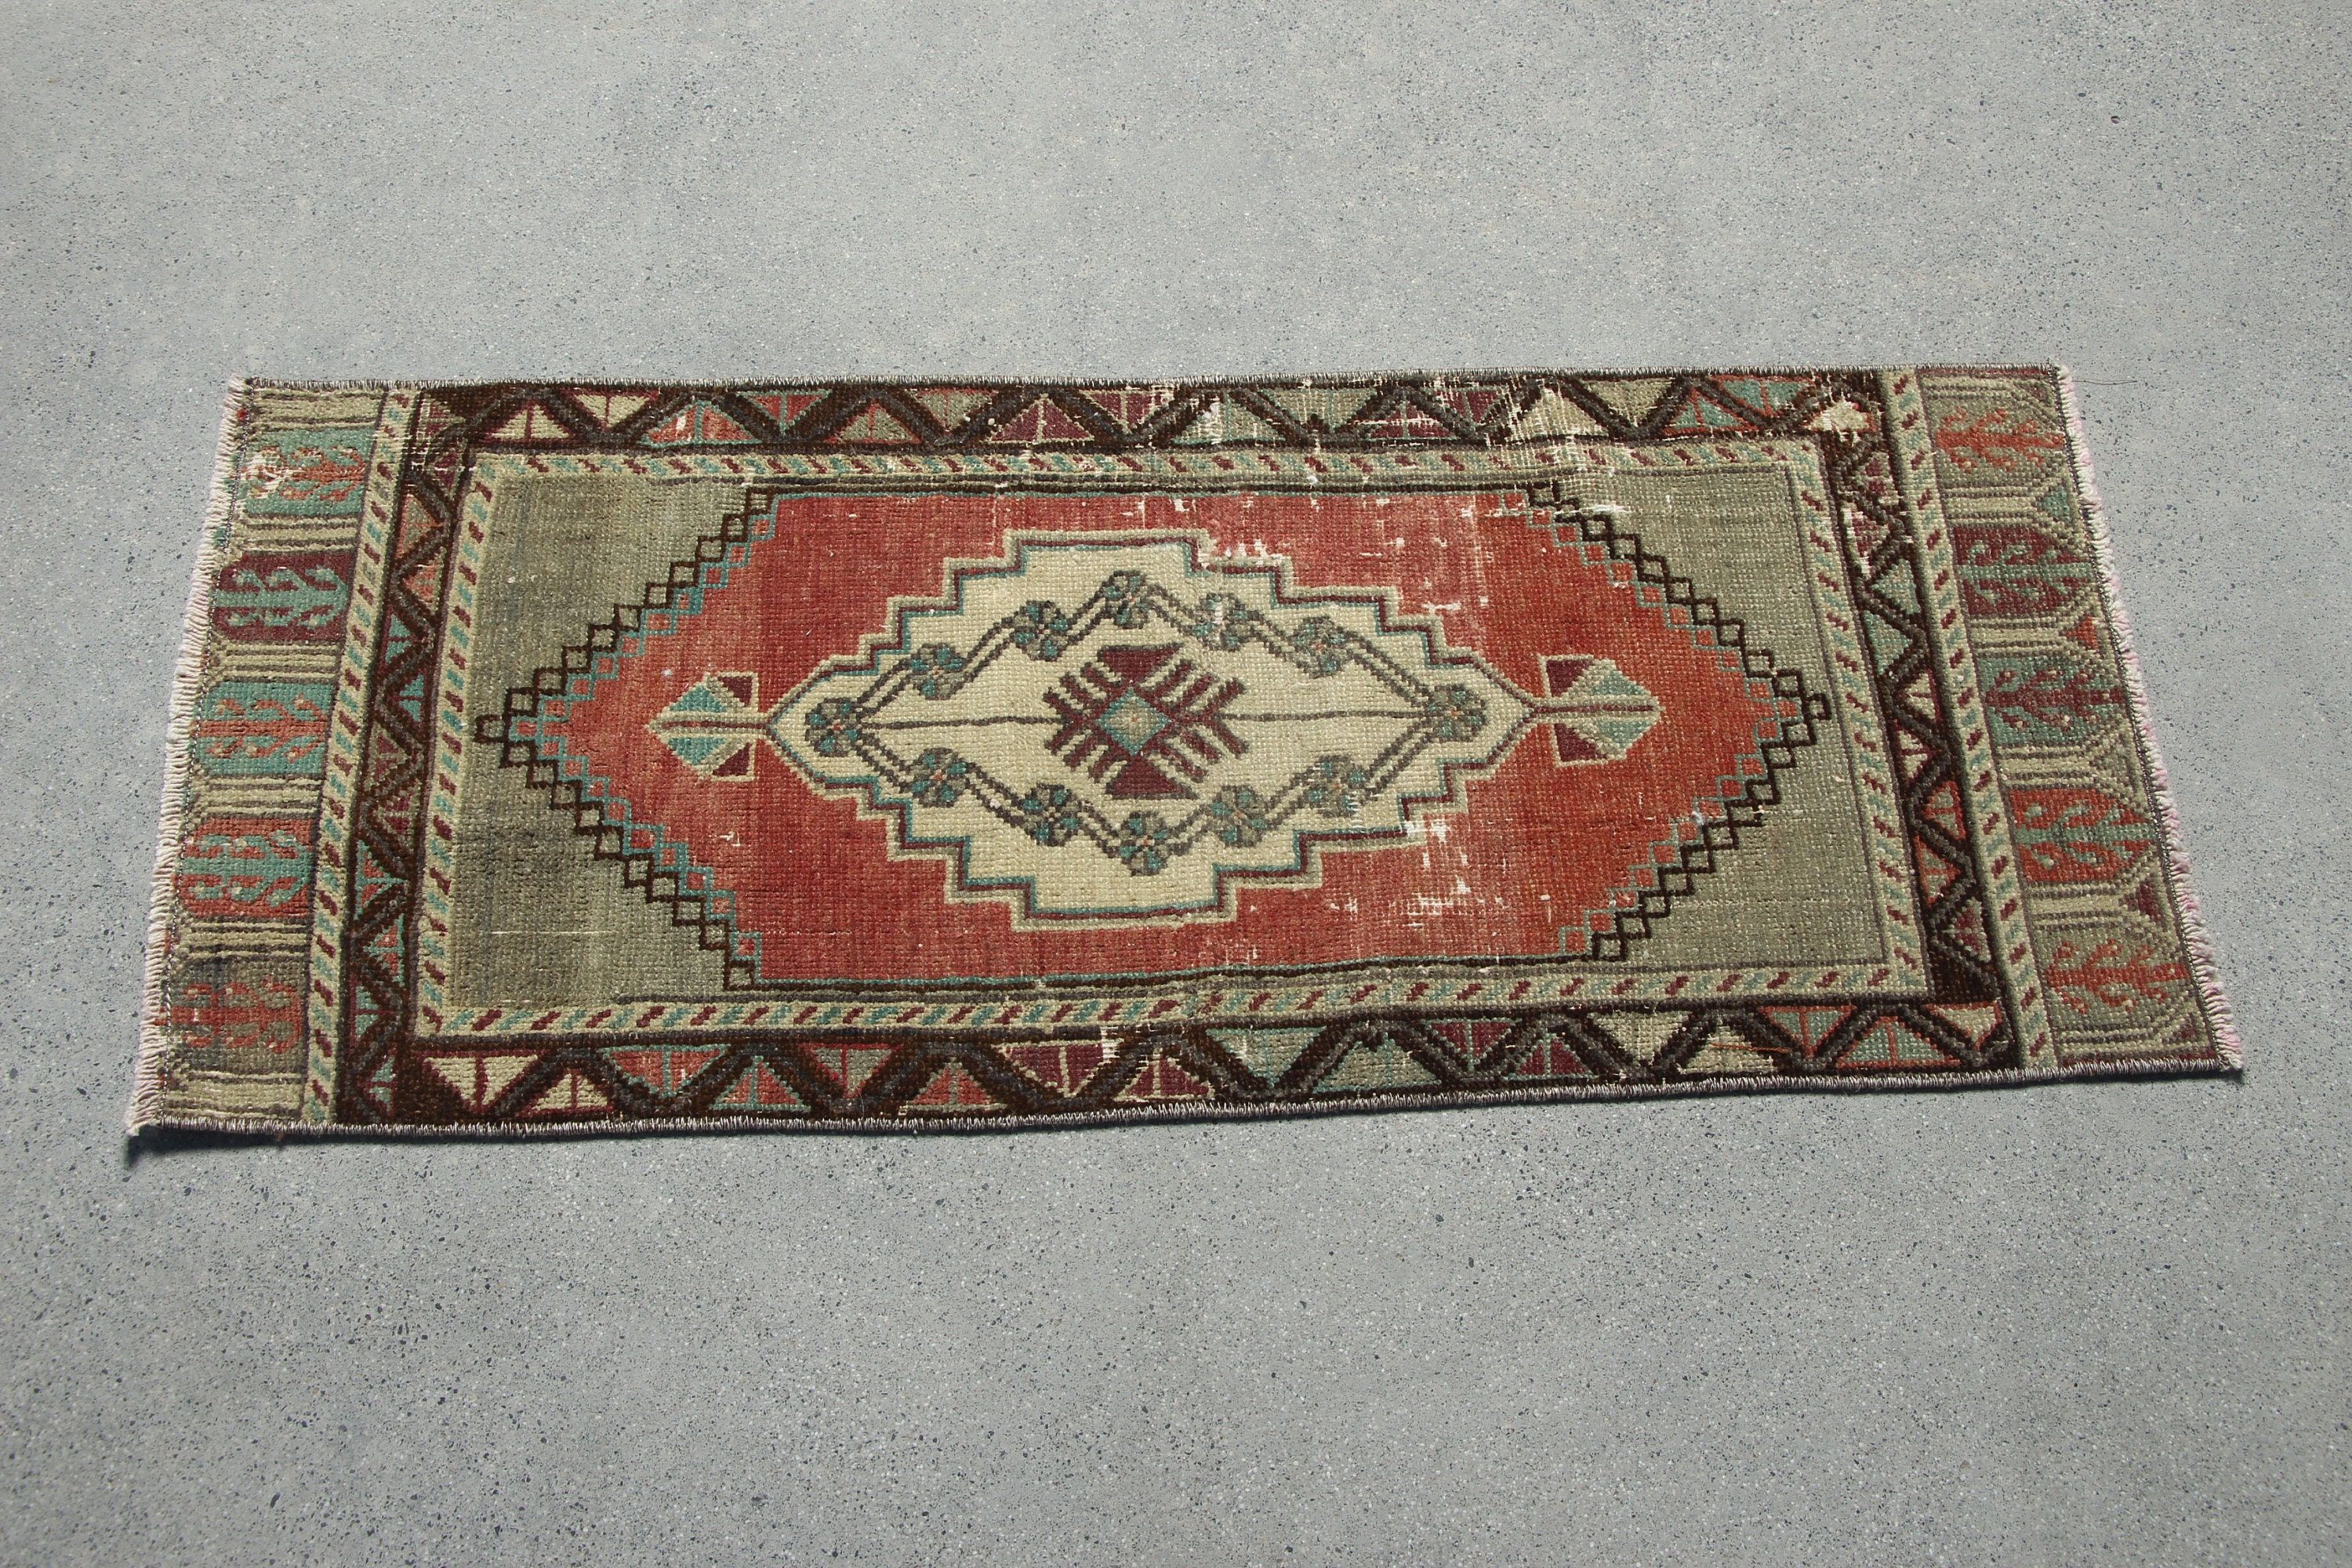 Anatolian Rug, Bright Rug, Kitchen Rug, Wall Hanging Rug, Vintage Rugs, 1.3x3.1 ft Small Rug, Turkish Rug, Bath Rug, Red Moroccan Rug